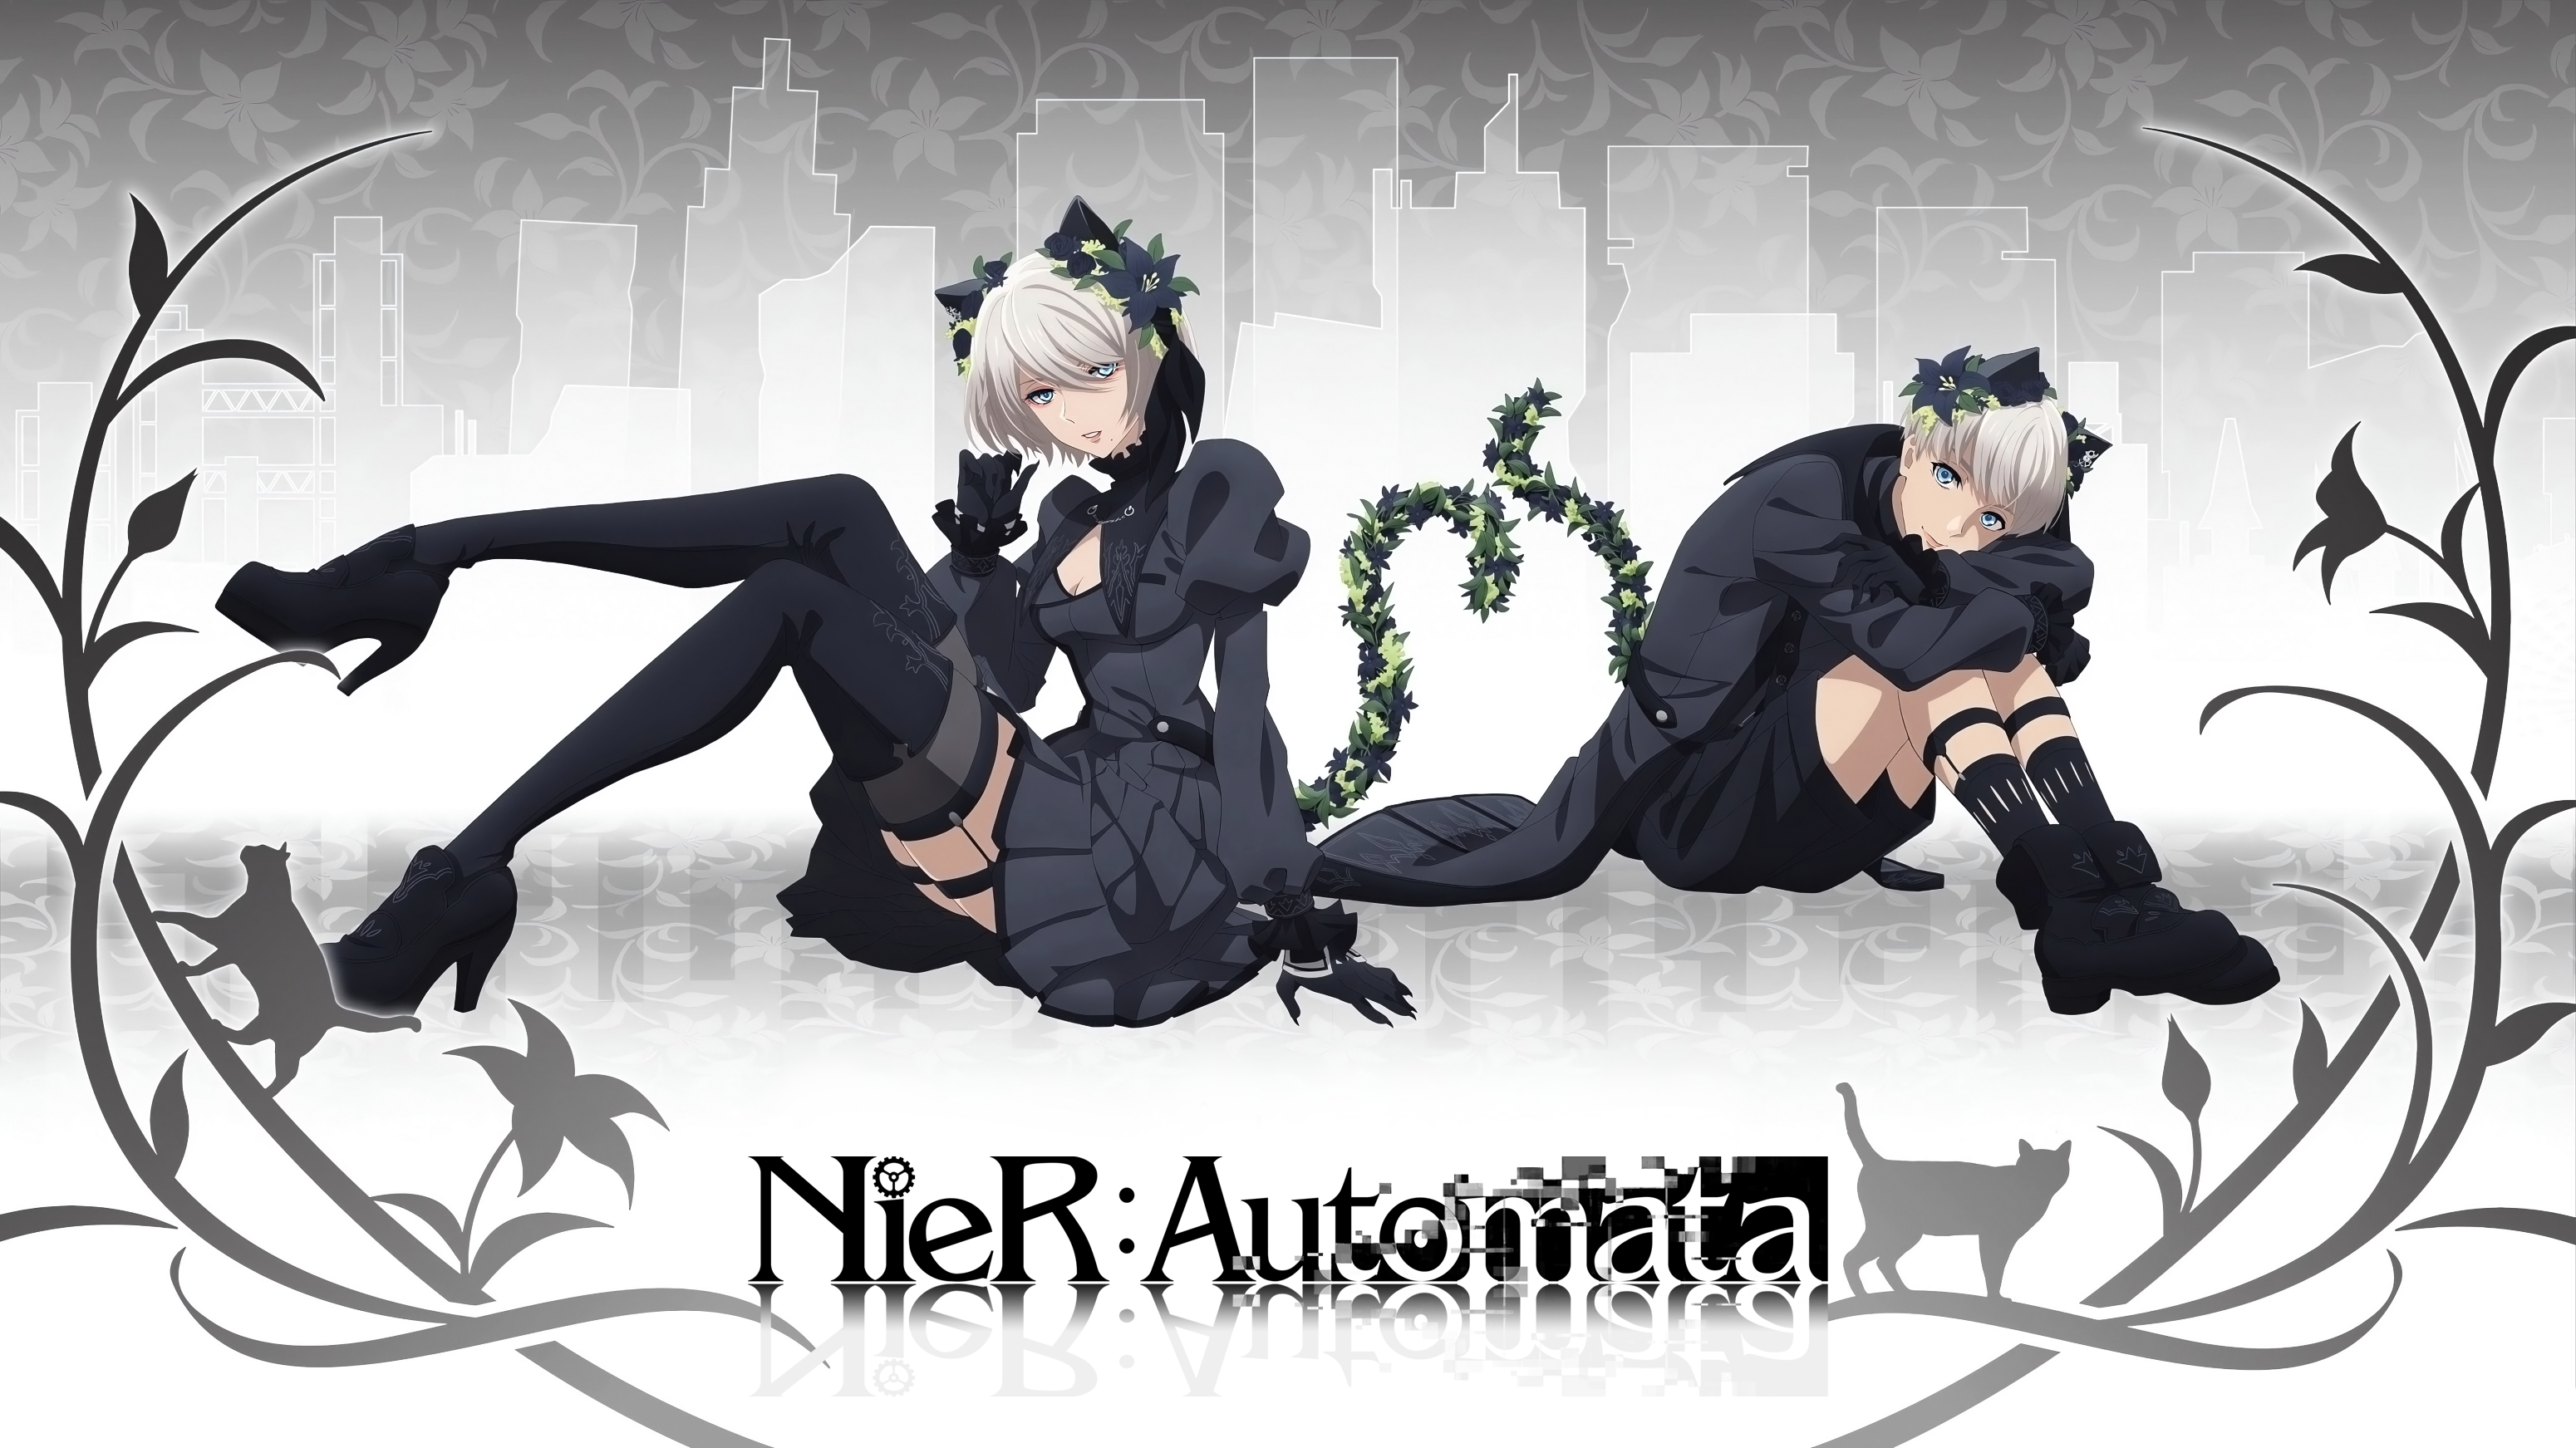 Nier Automata 2B Nier Automata 9S Nier Automata Black Dress Flowers Smiling Silver Hair Anime Girls  3100x1743